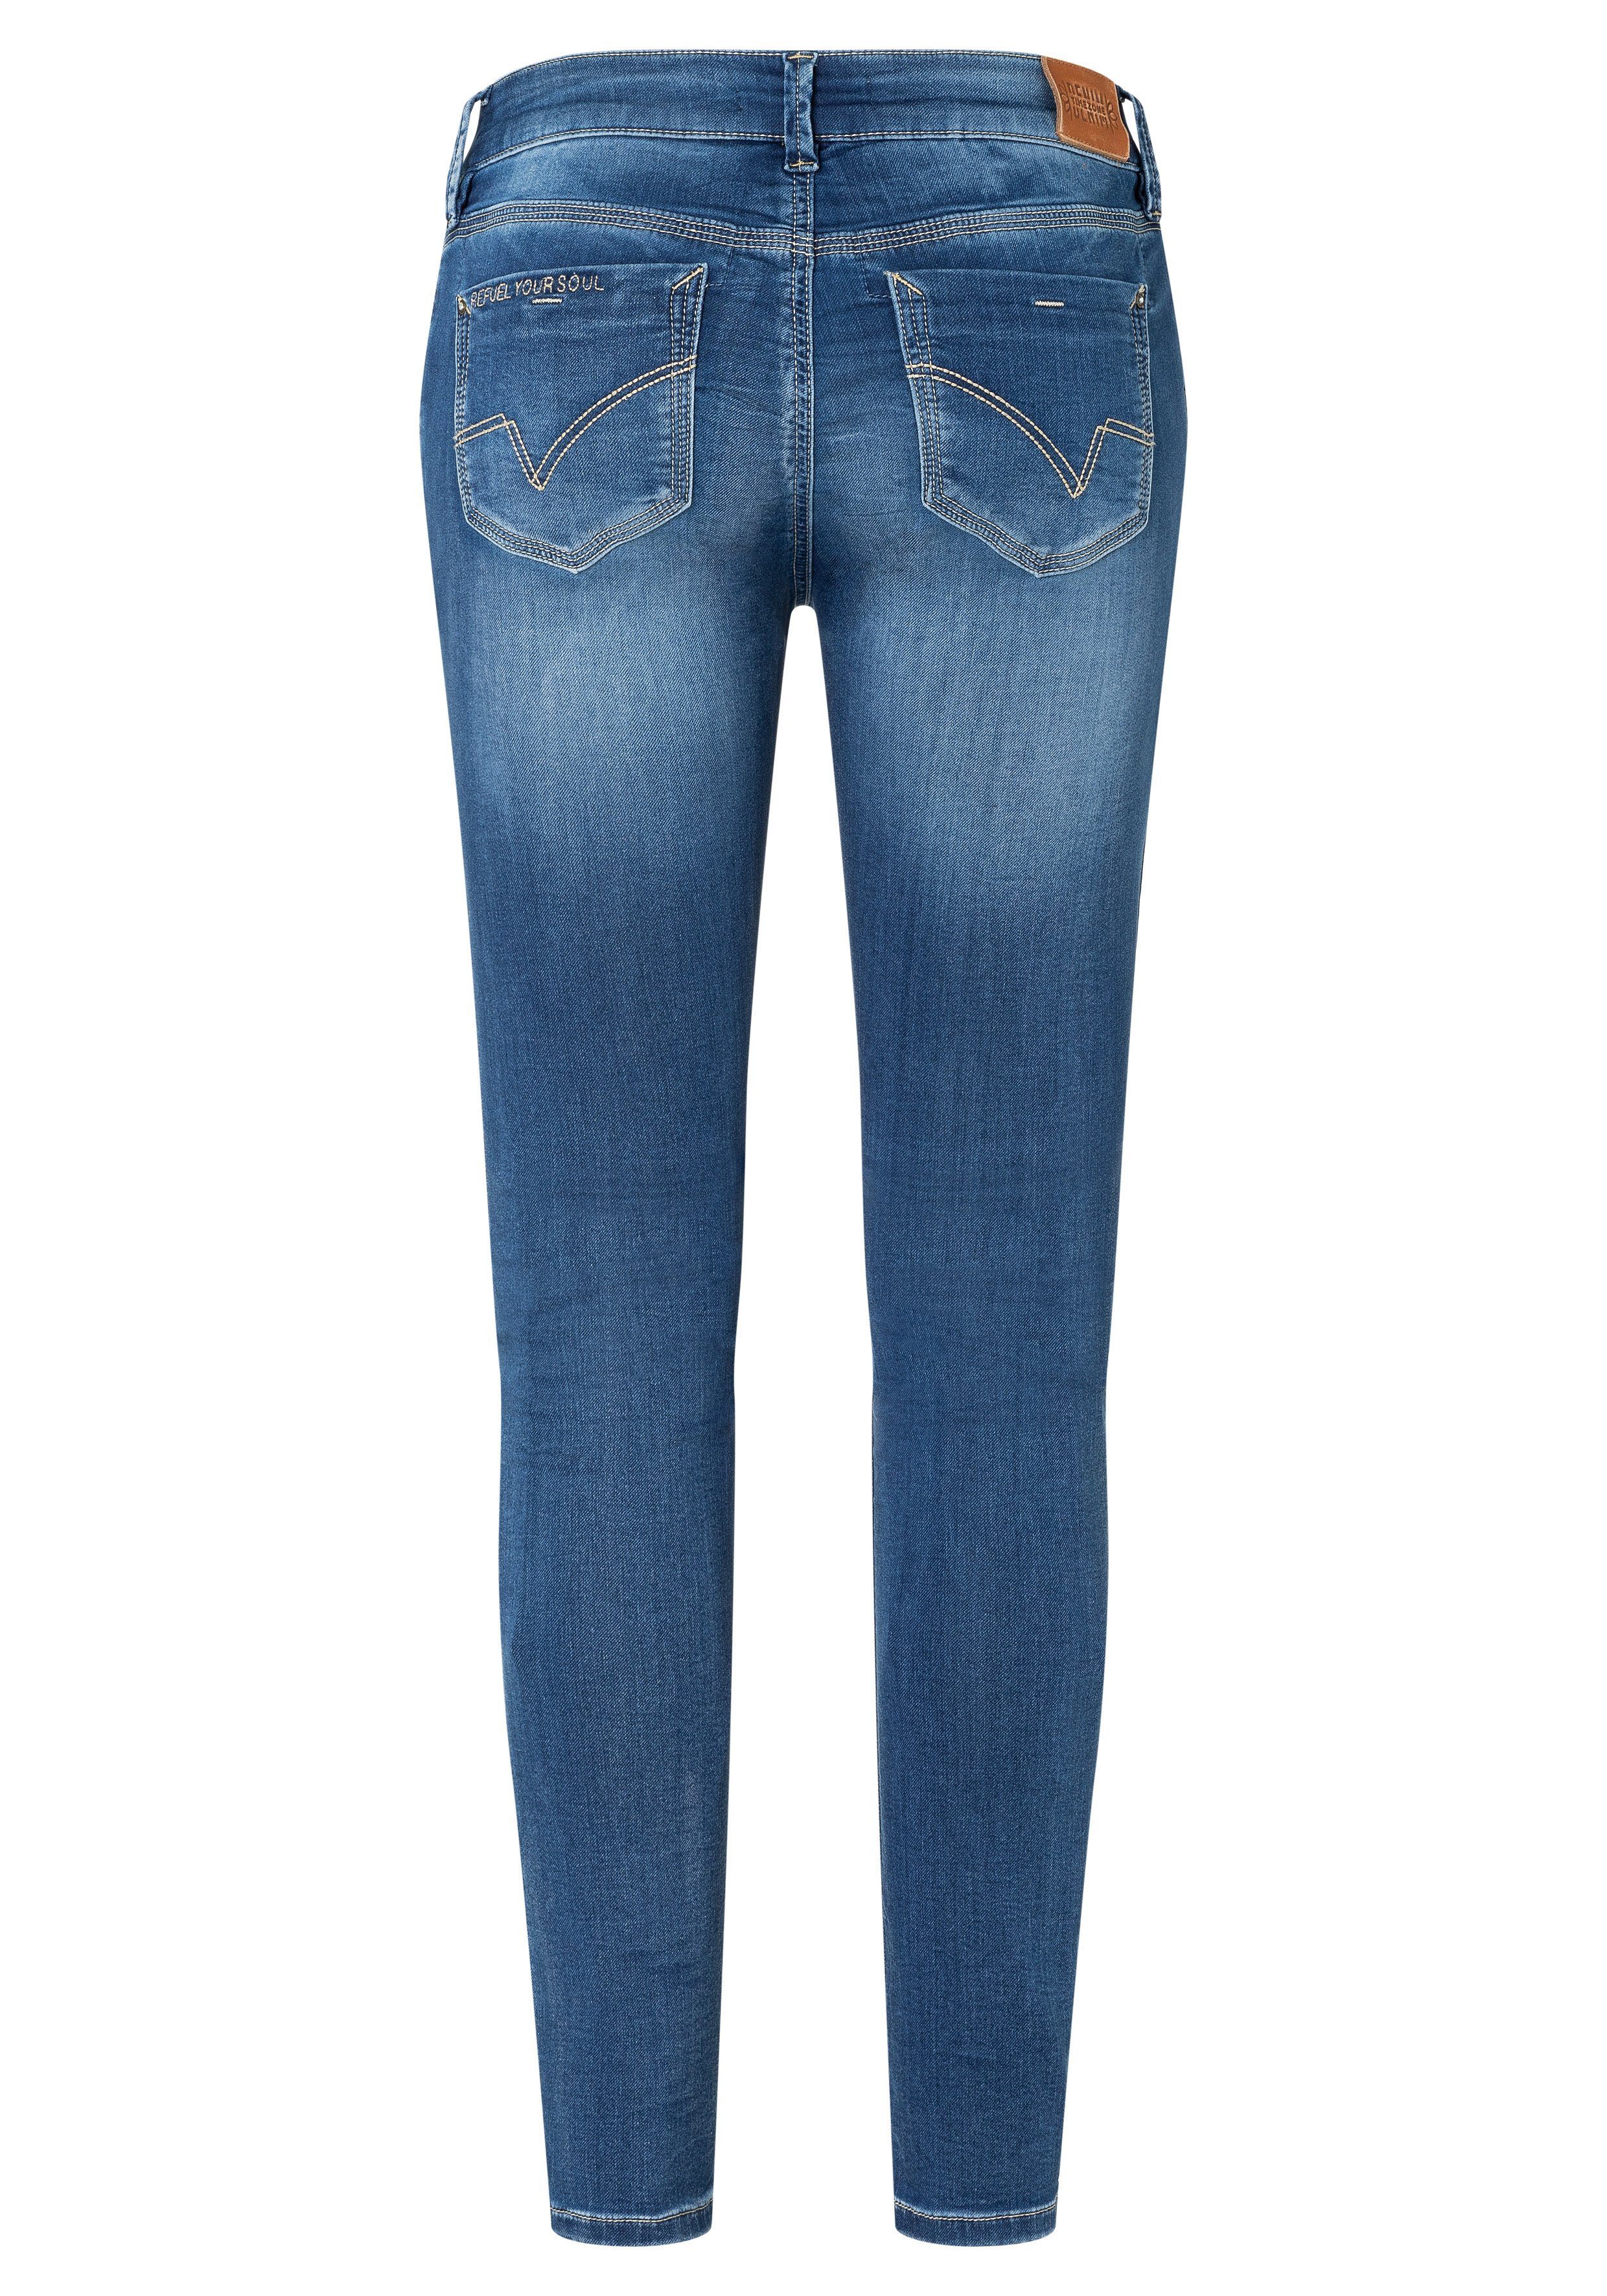 TIMEZONE 5-Pocket-Jeans Tight AleenaTZ blau Jogg